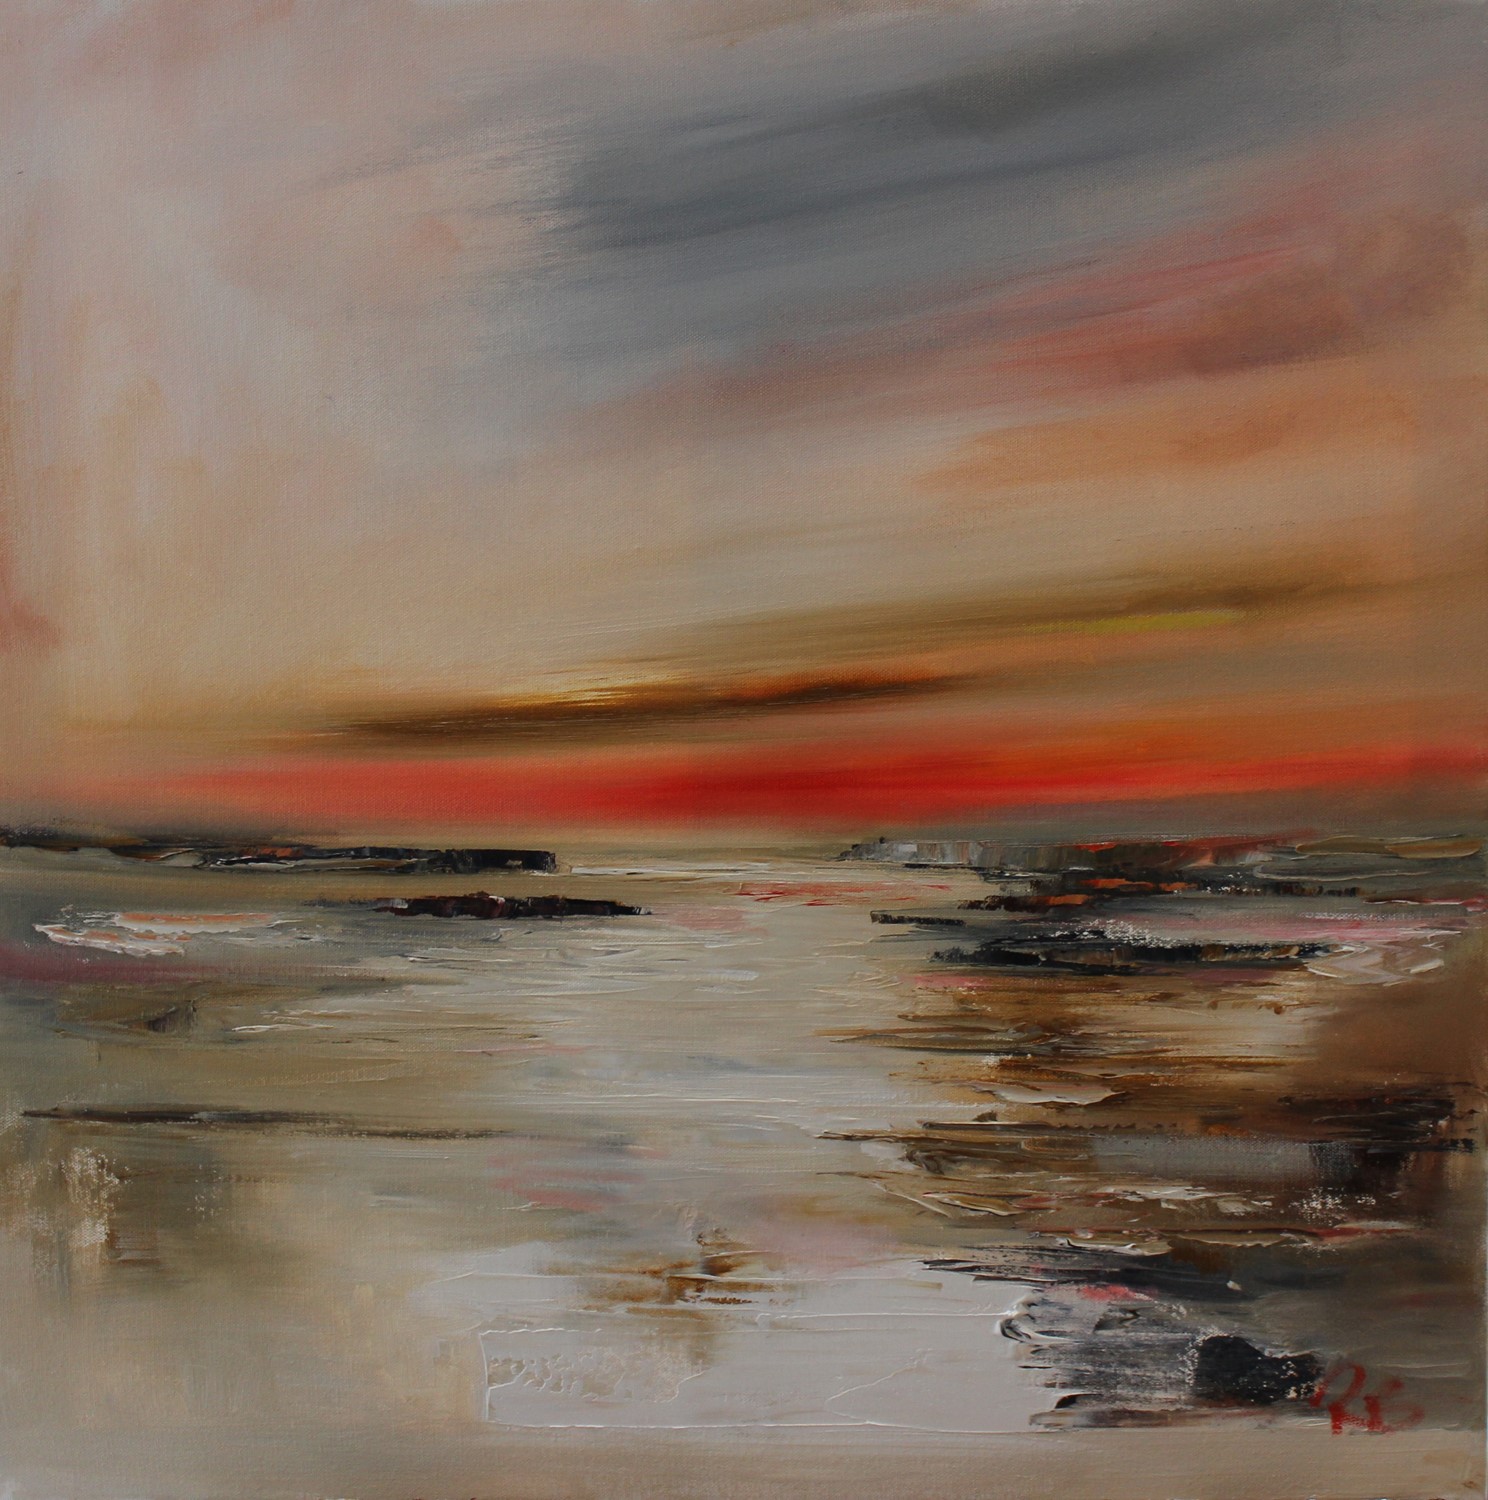 'A Tidal River at Sundown' by artist Rosanne Barr